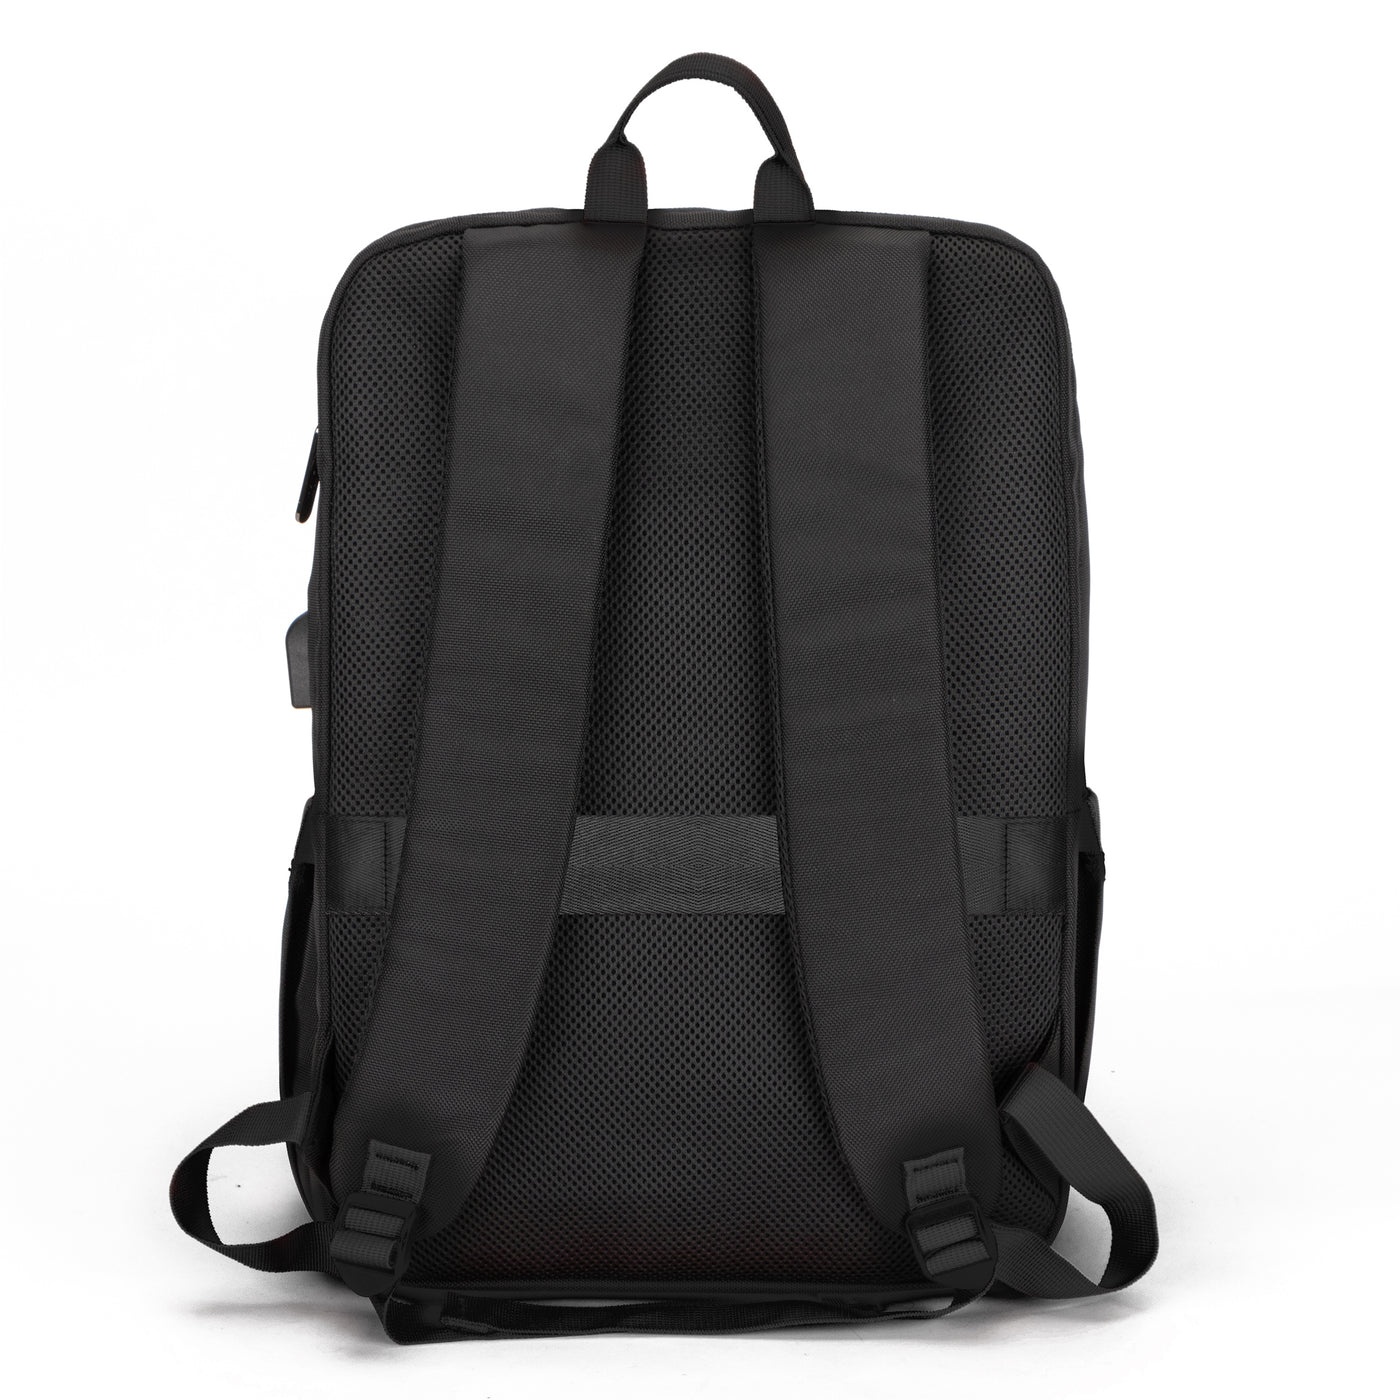 IZOD Gina Business Travel Slim Durable Laptop Backpack USB Charging Port, Computer Bag Fits 15.6 Inch Laptop Notebook